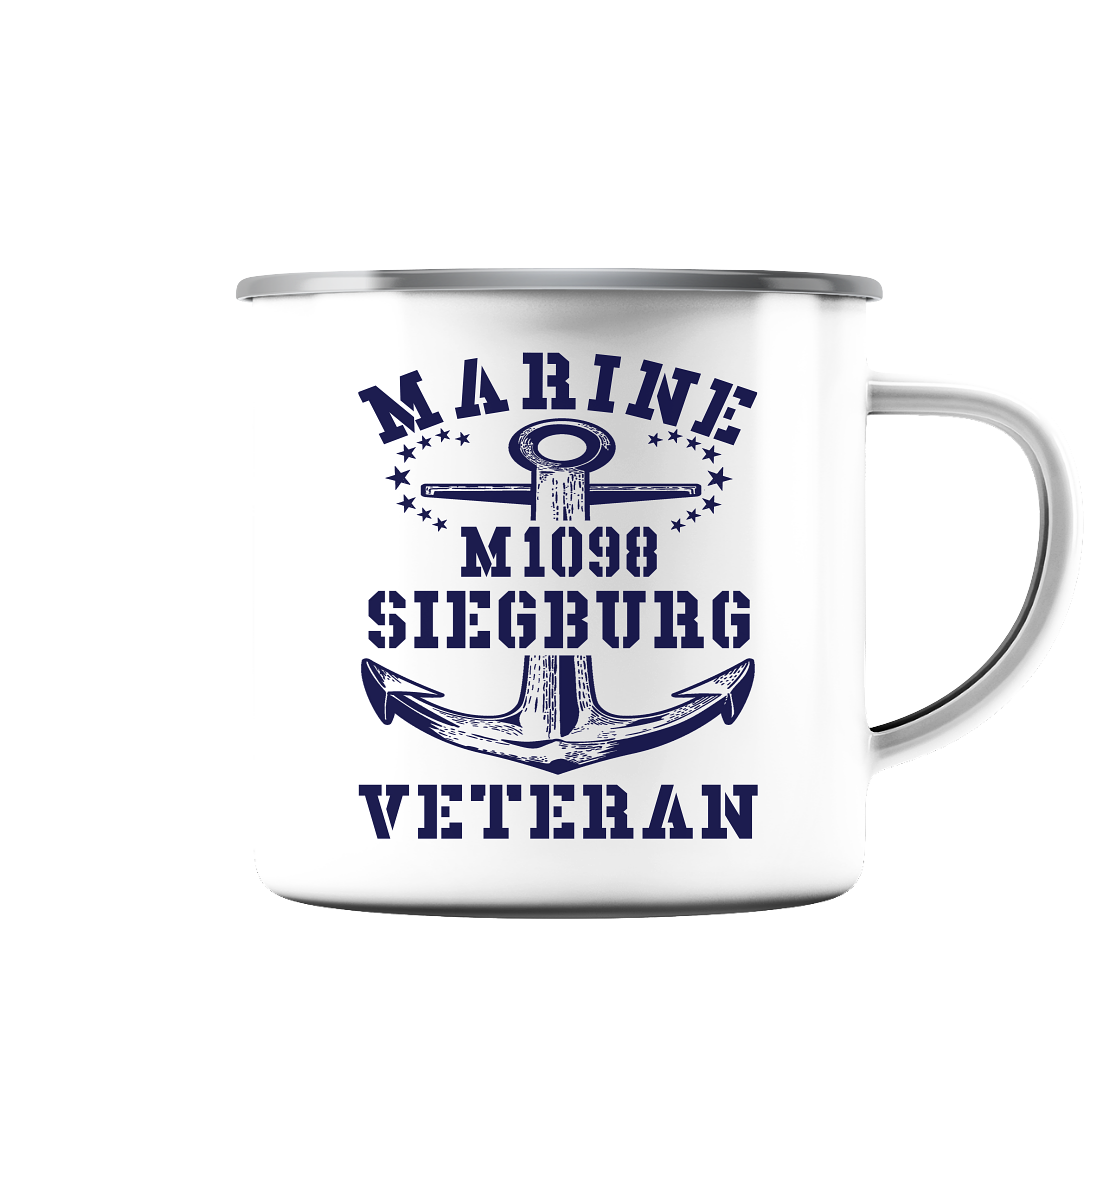 M1098 SIEGBURG Marine Veteran - Emaille Tasse (Silber)